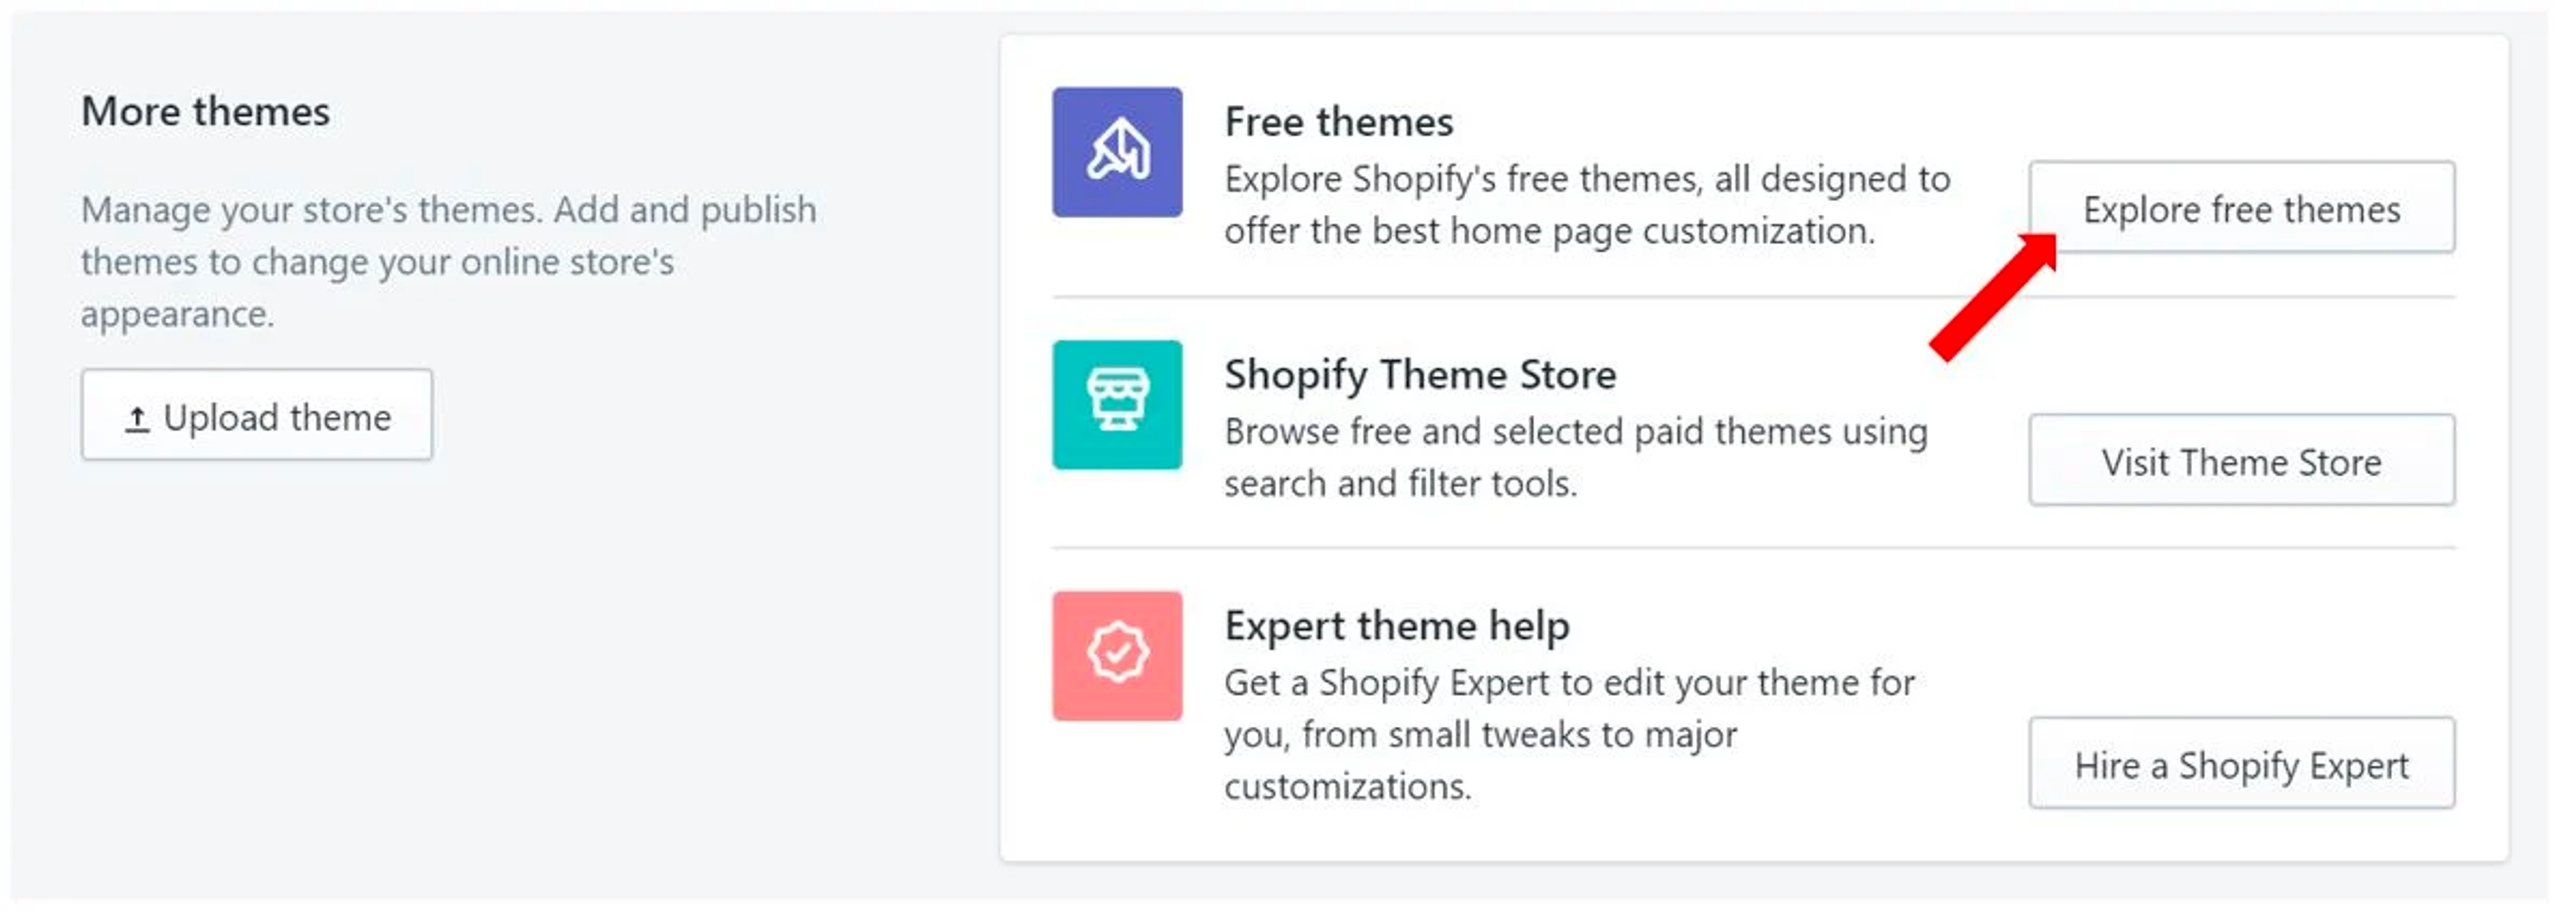 Shopify free themes